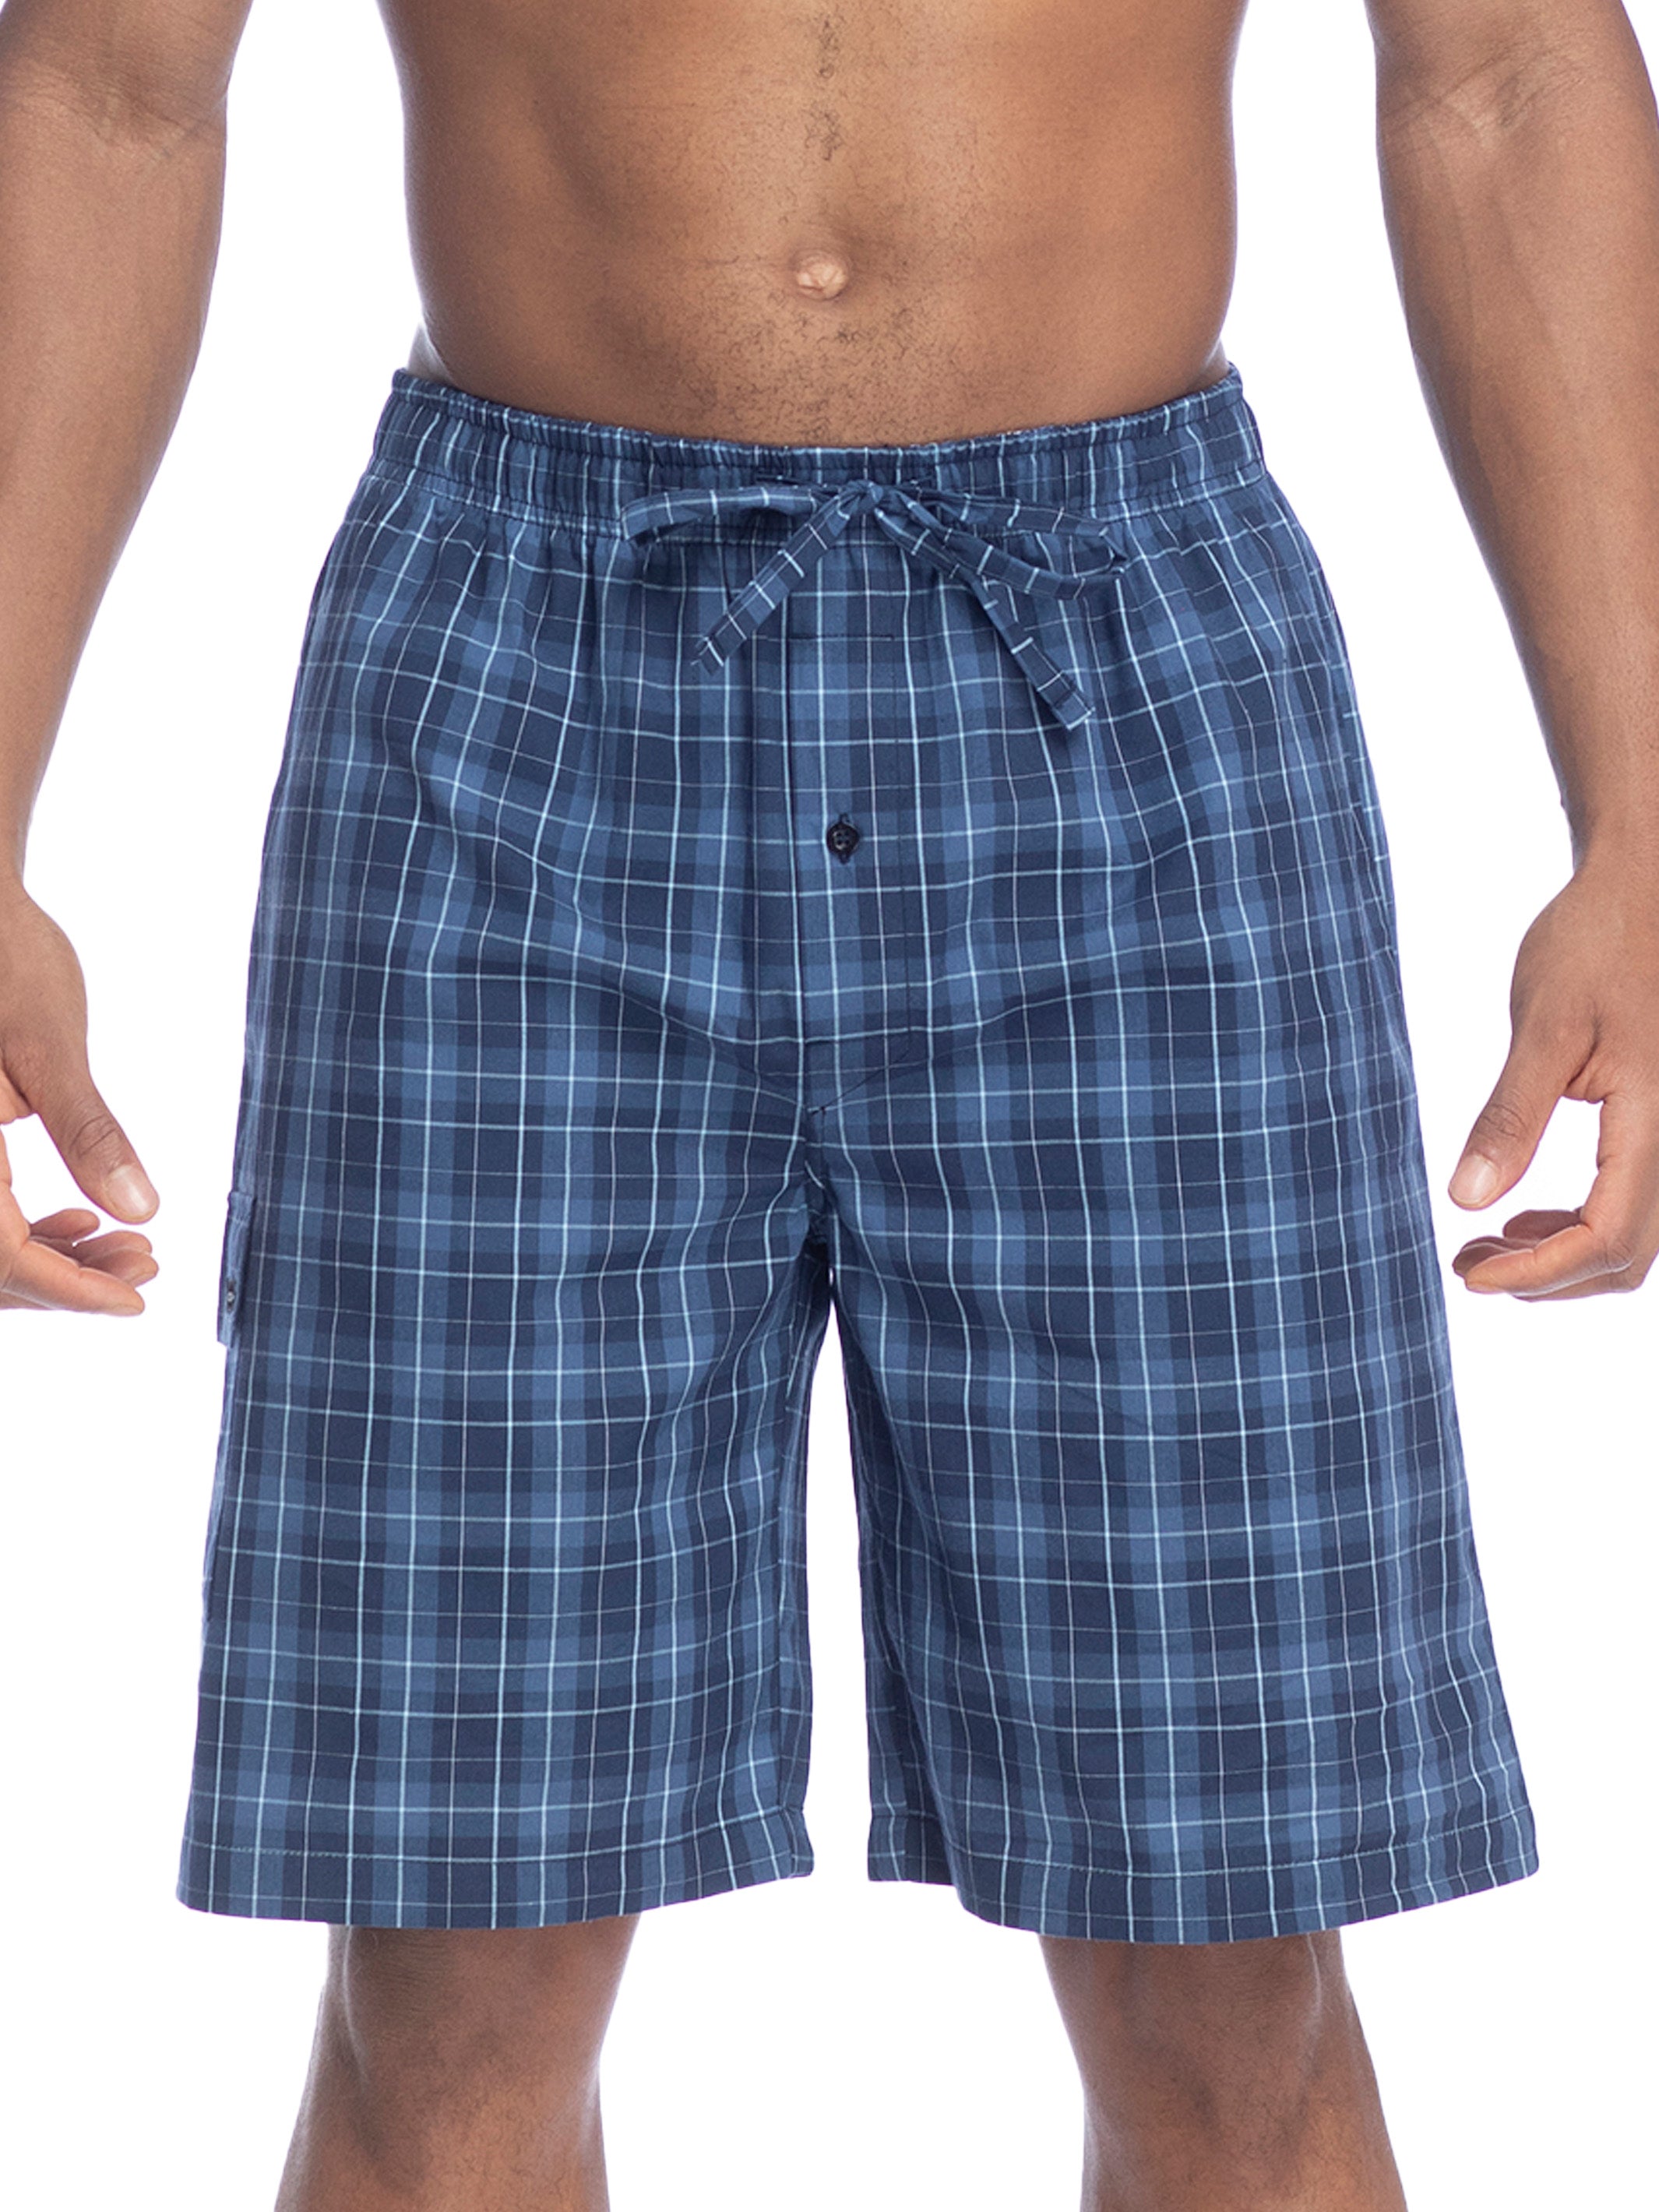 Nautica Men's Classic Underwear Contour Pouch Cotton Stretch Trunk Gray XL  